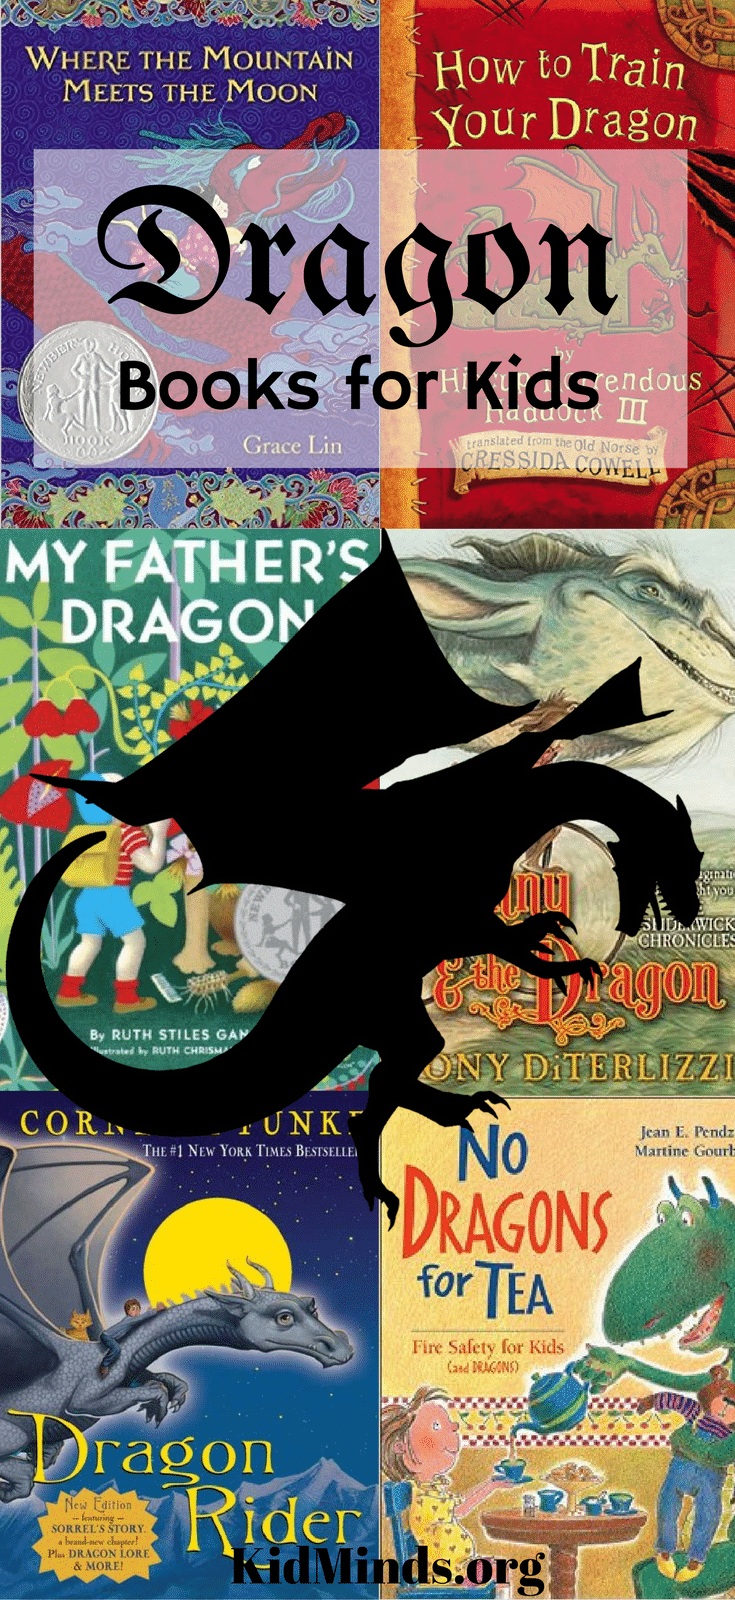 Fabulous Dragon Books for Kids KidMinds